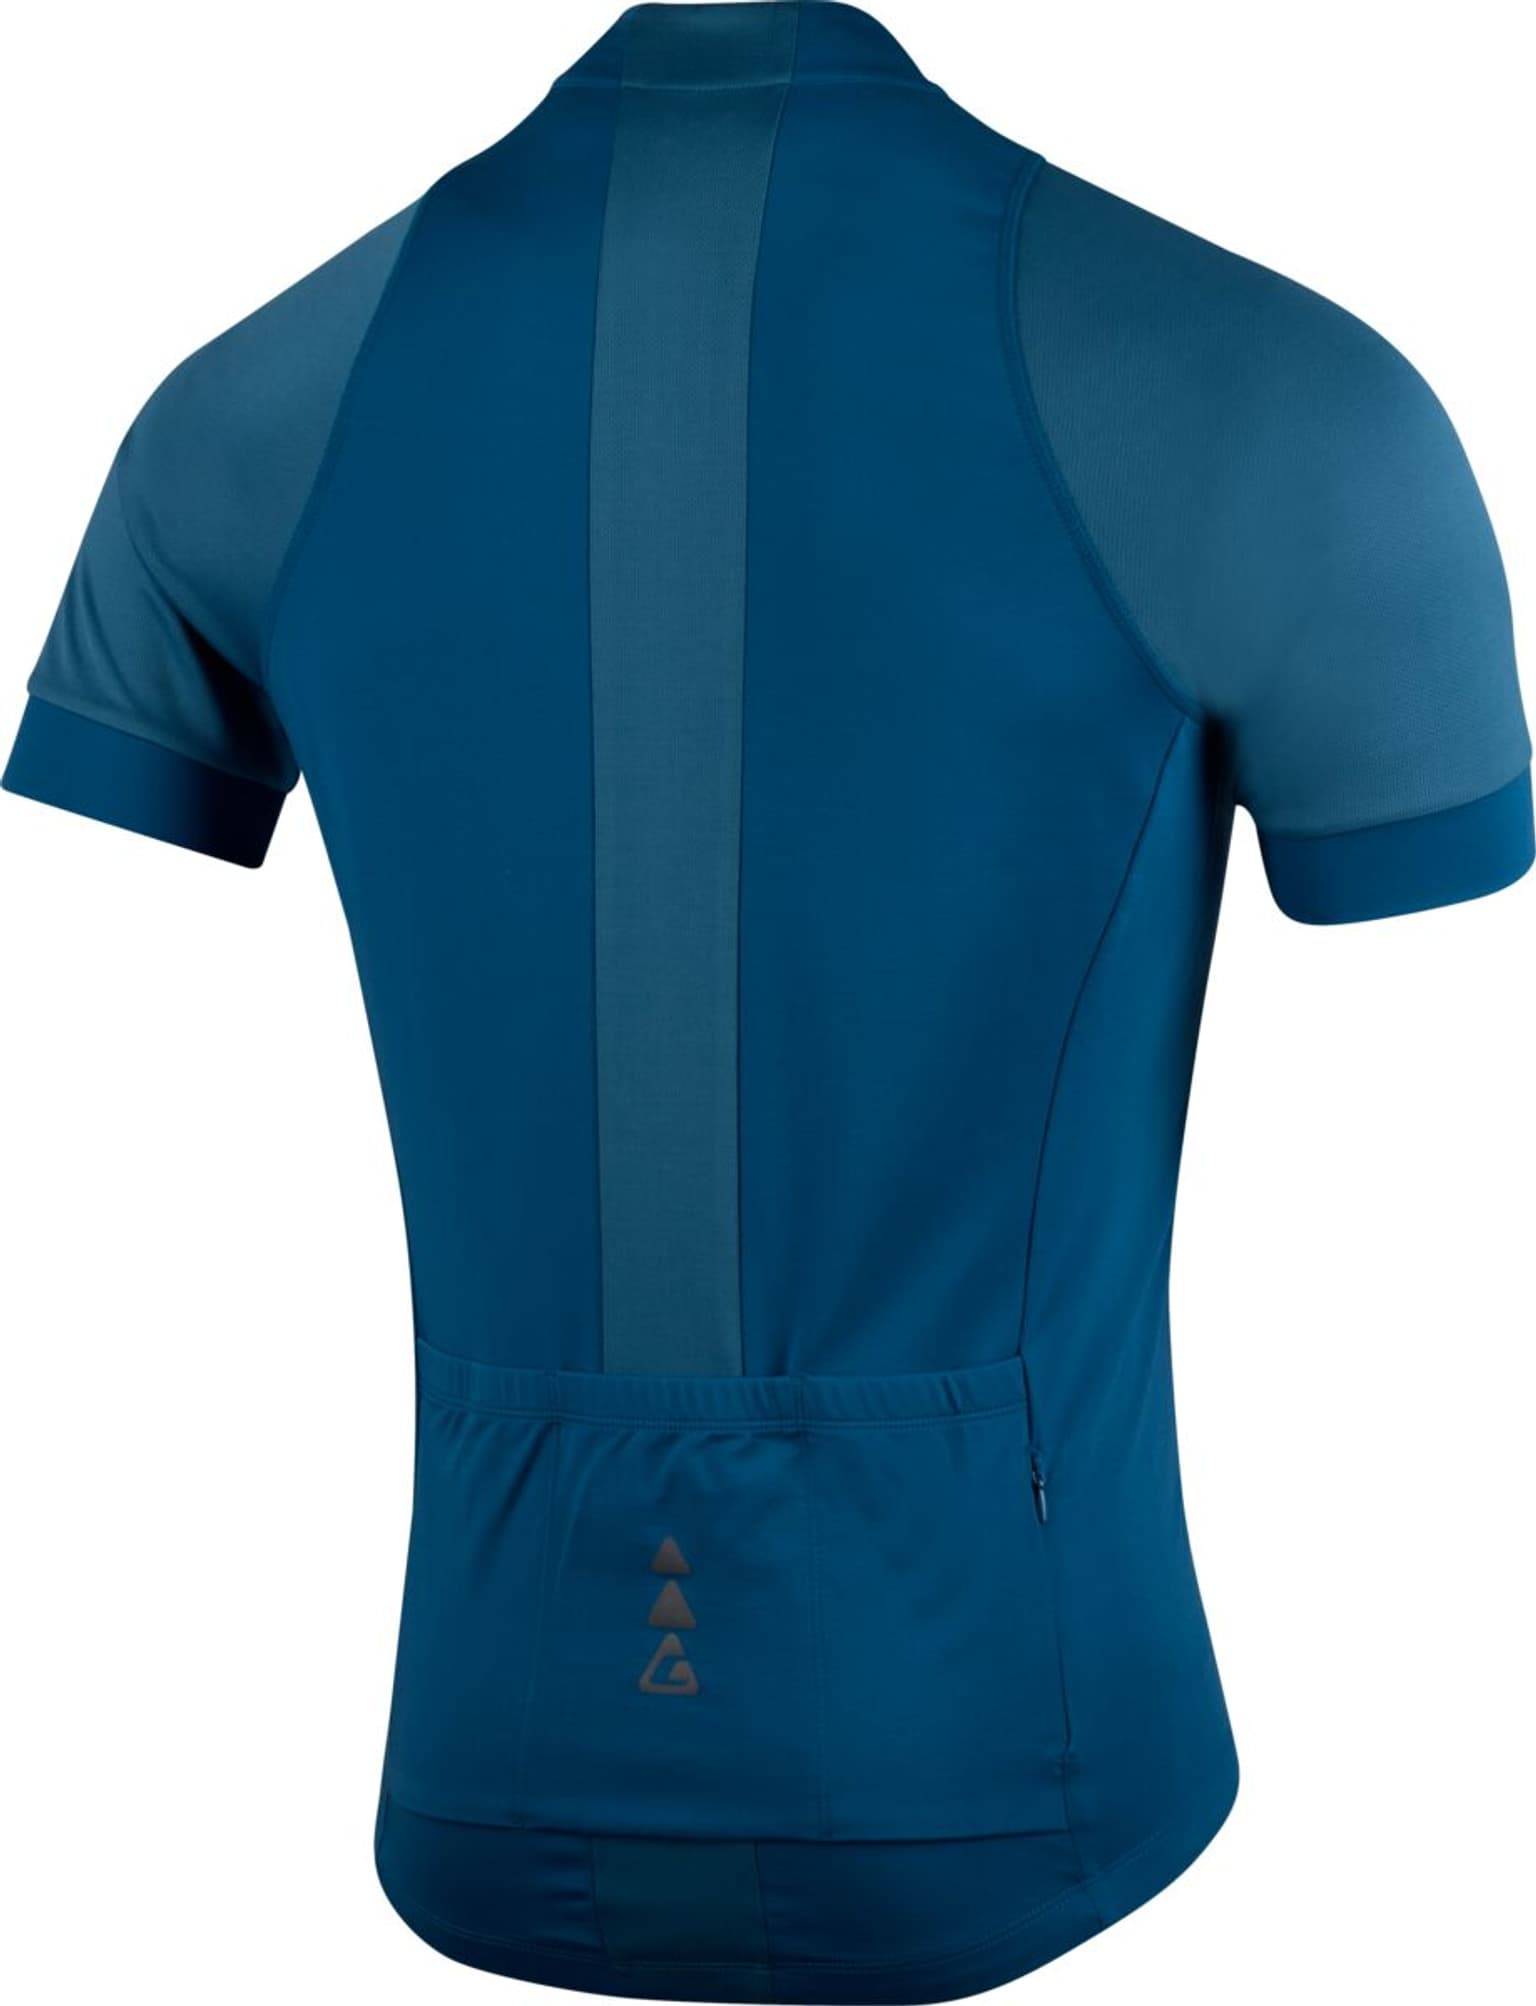 Crosswave Crosswave Full Zip Shirt Edis Maglietta da bici blu-marino 6